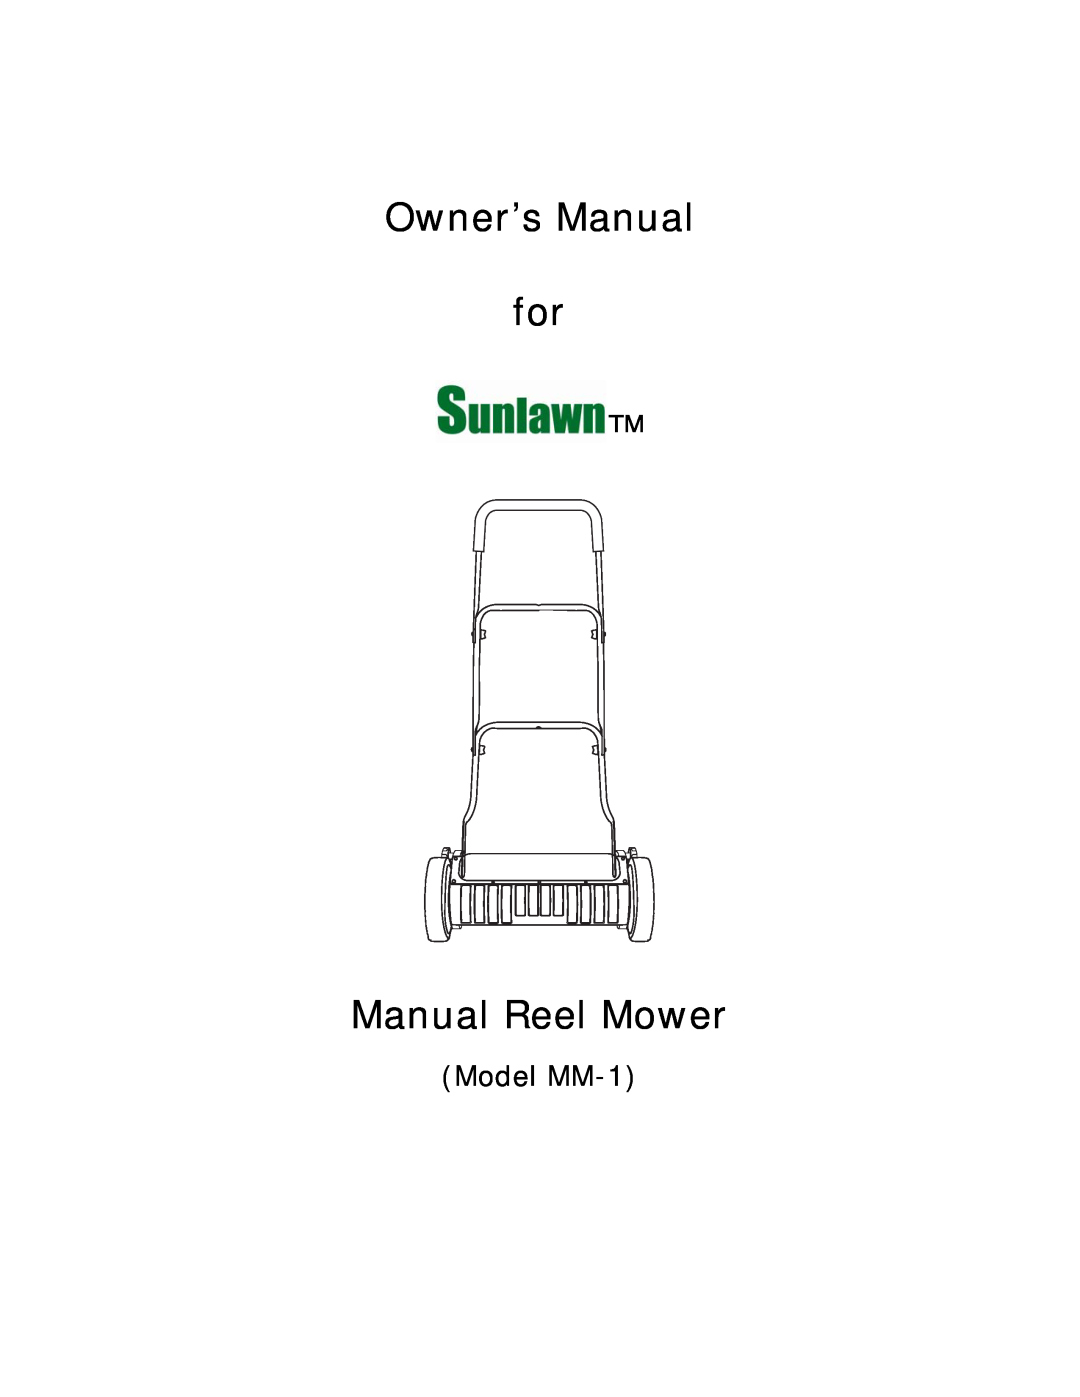 Reel Mowers, Etc owner manual Manual Reel Mower, Model MM-1 